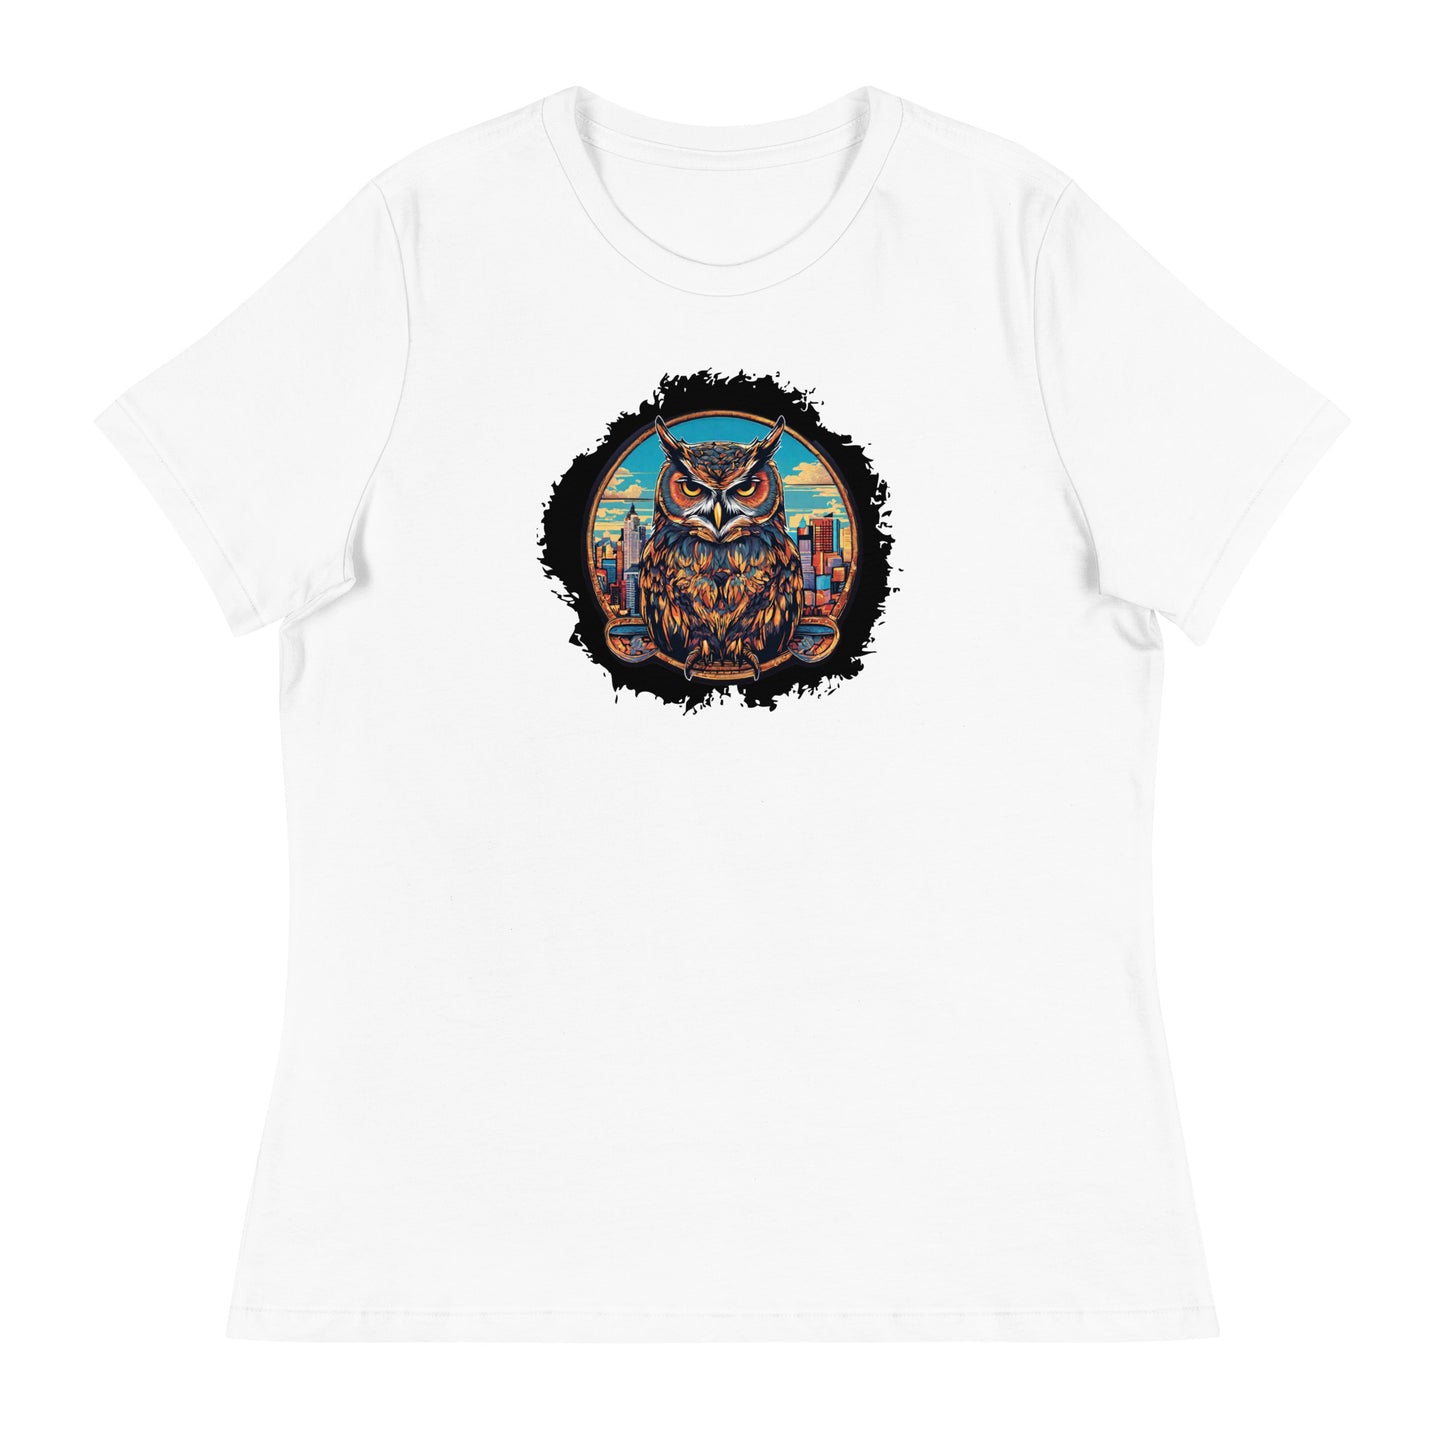 Owl in the City Emblem Women's T-Shirt White